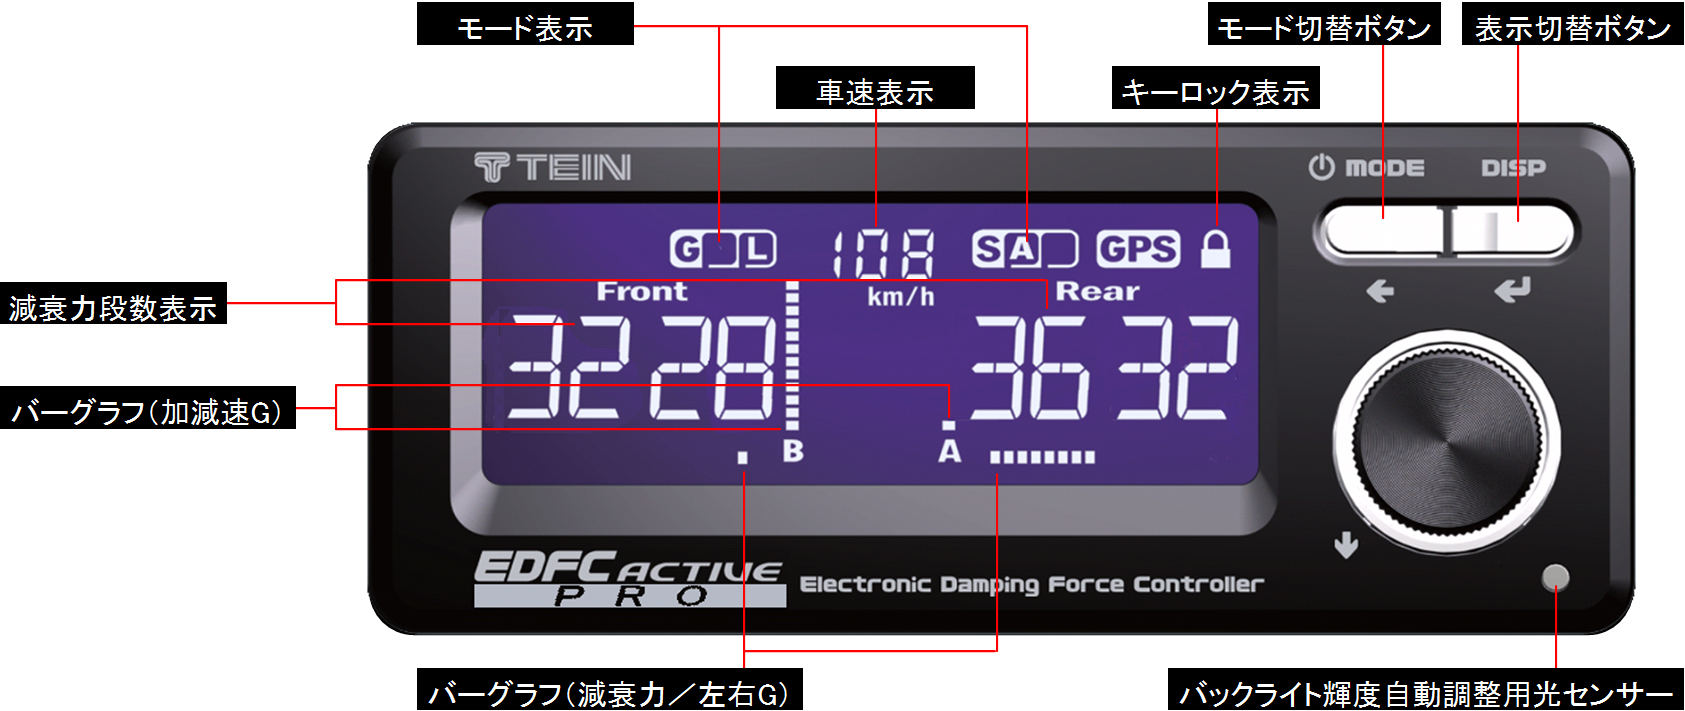 TEIN.co.jp: EDFC ACTIVE PRO - 製品紹介